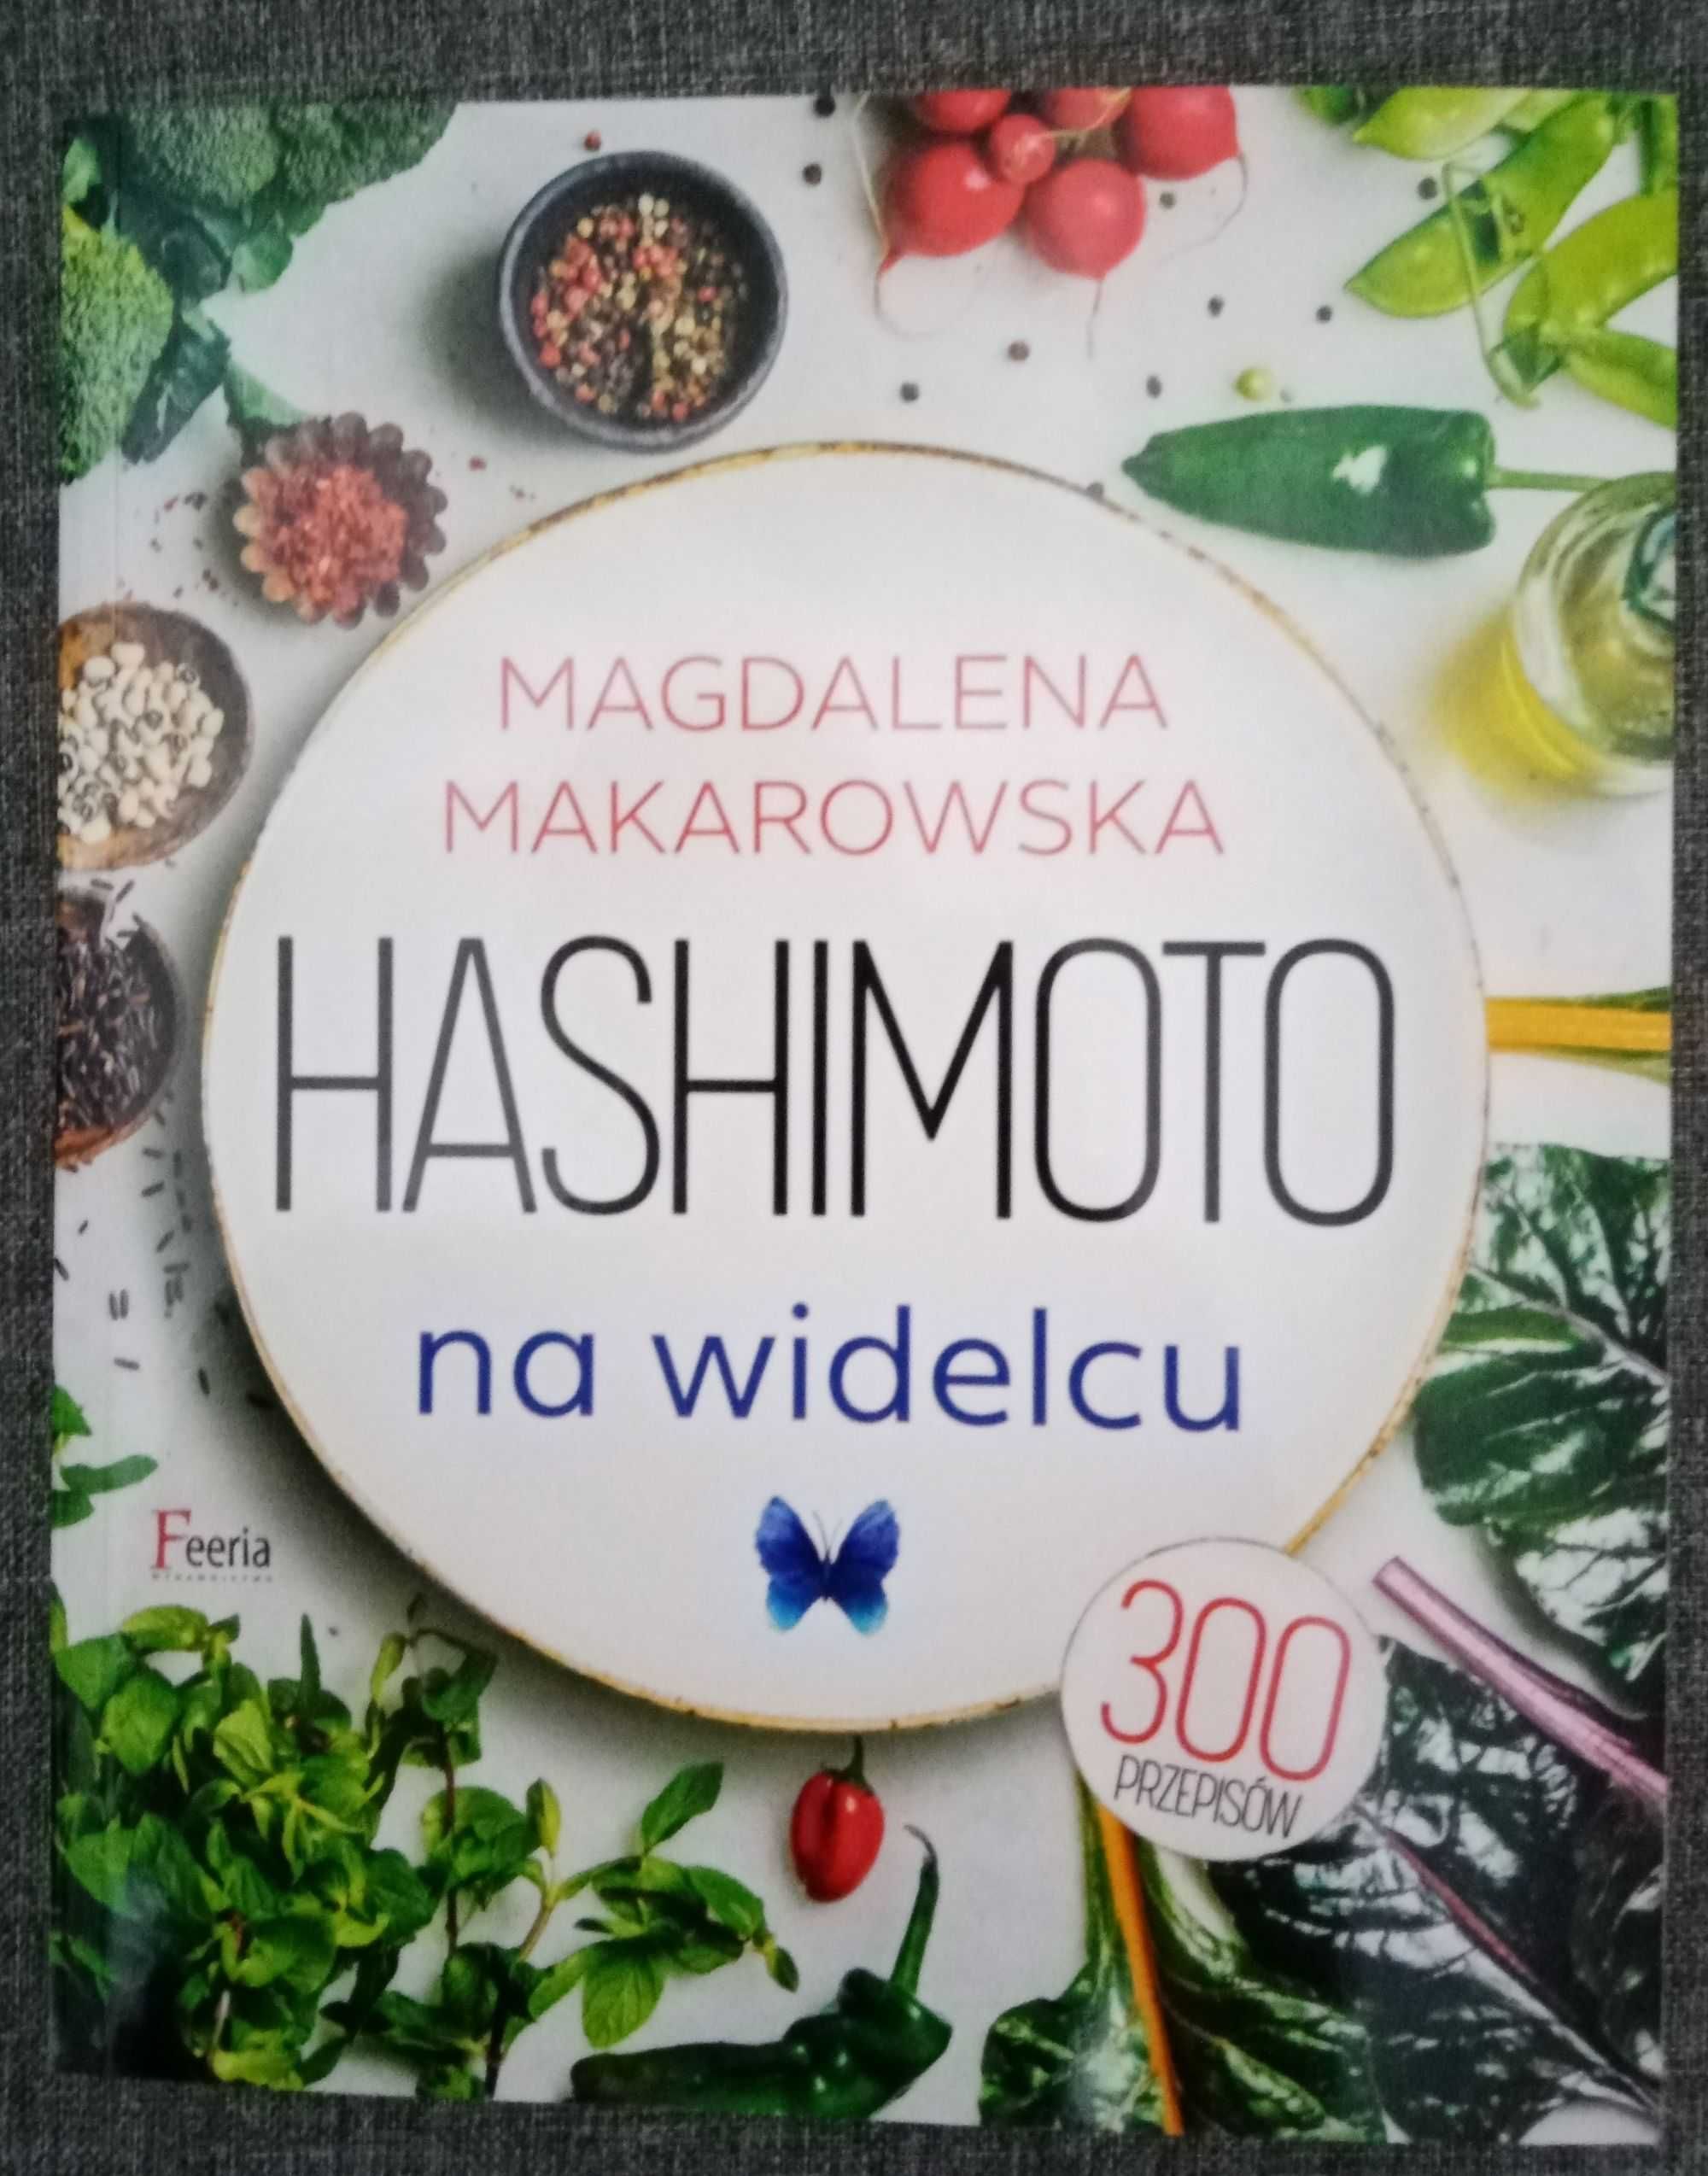 Hashimoto na widelcu - Makarowska